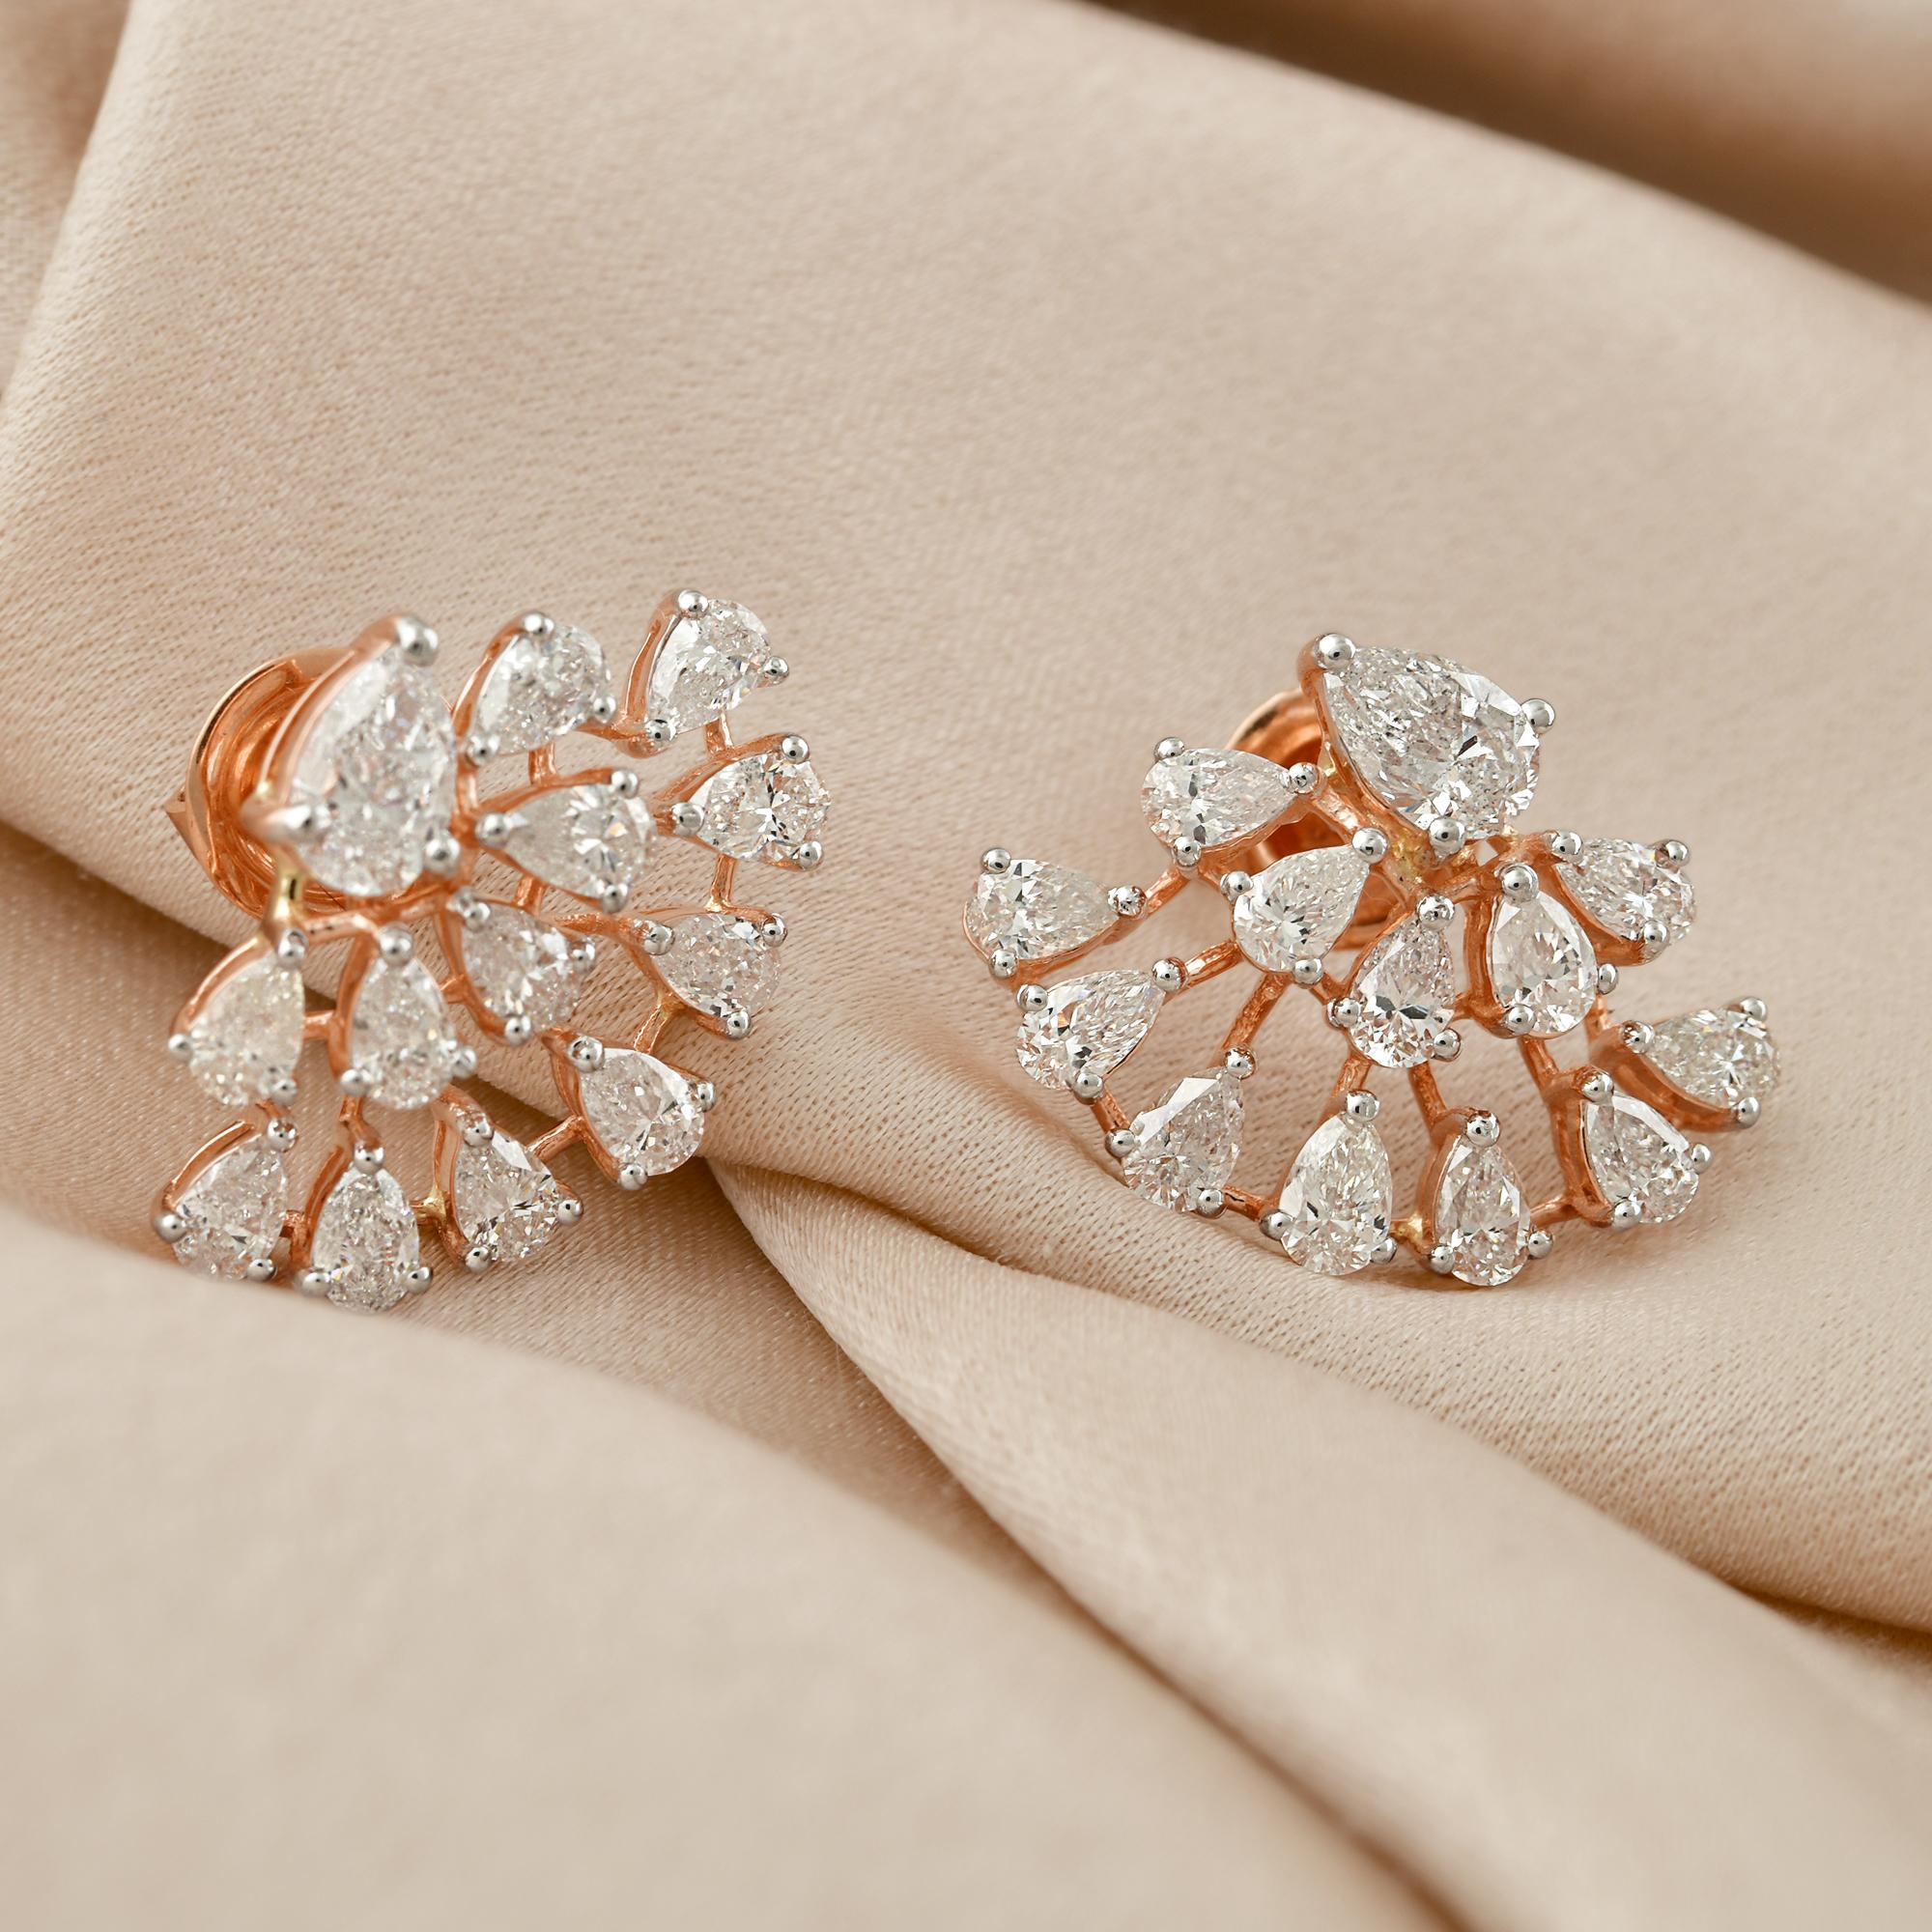 Modern 3.10 Carat Pear Shape Diamond Stud Earrings Solid 14k Rose Gold Handmade Jewelry For Sale